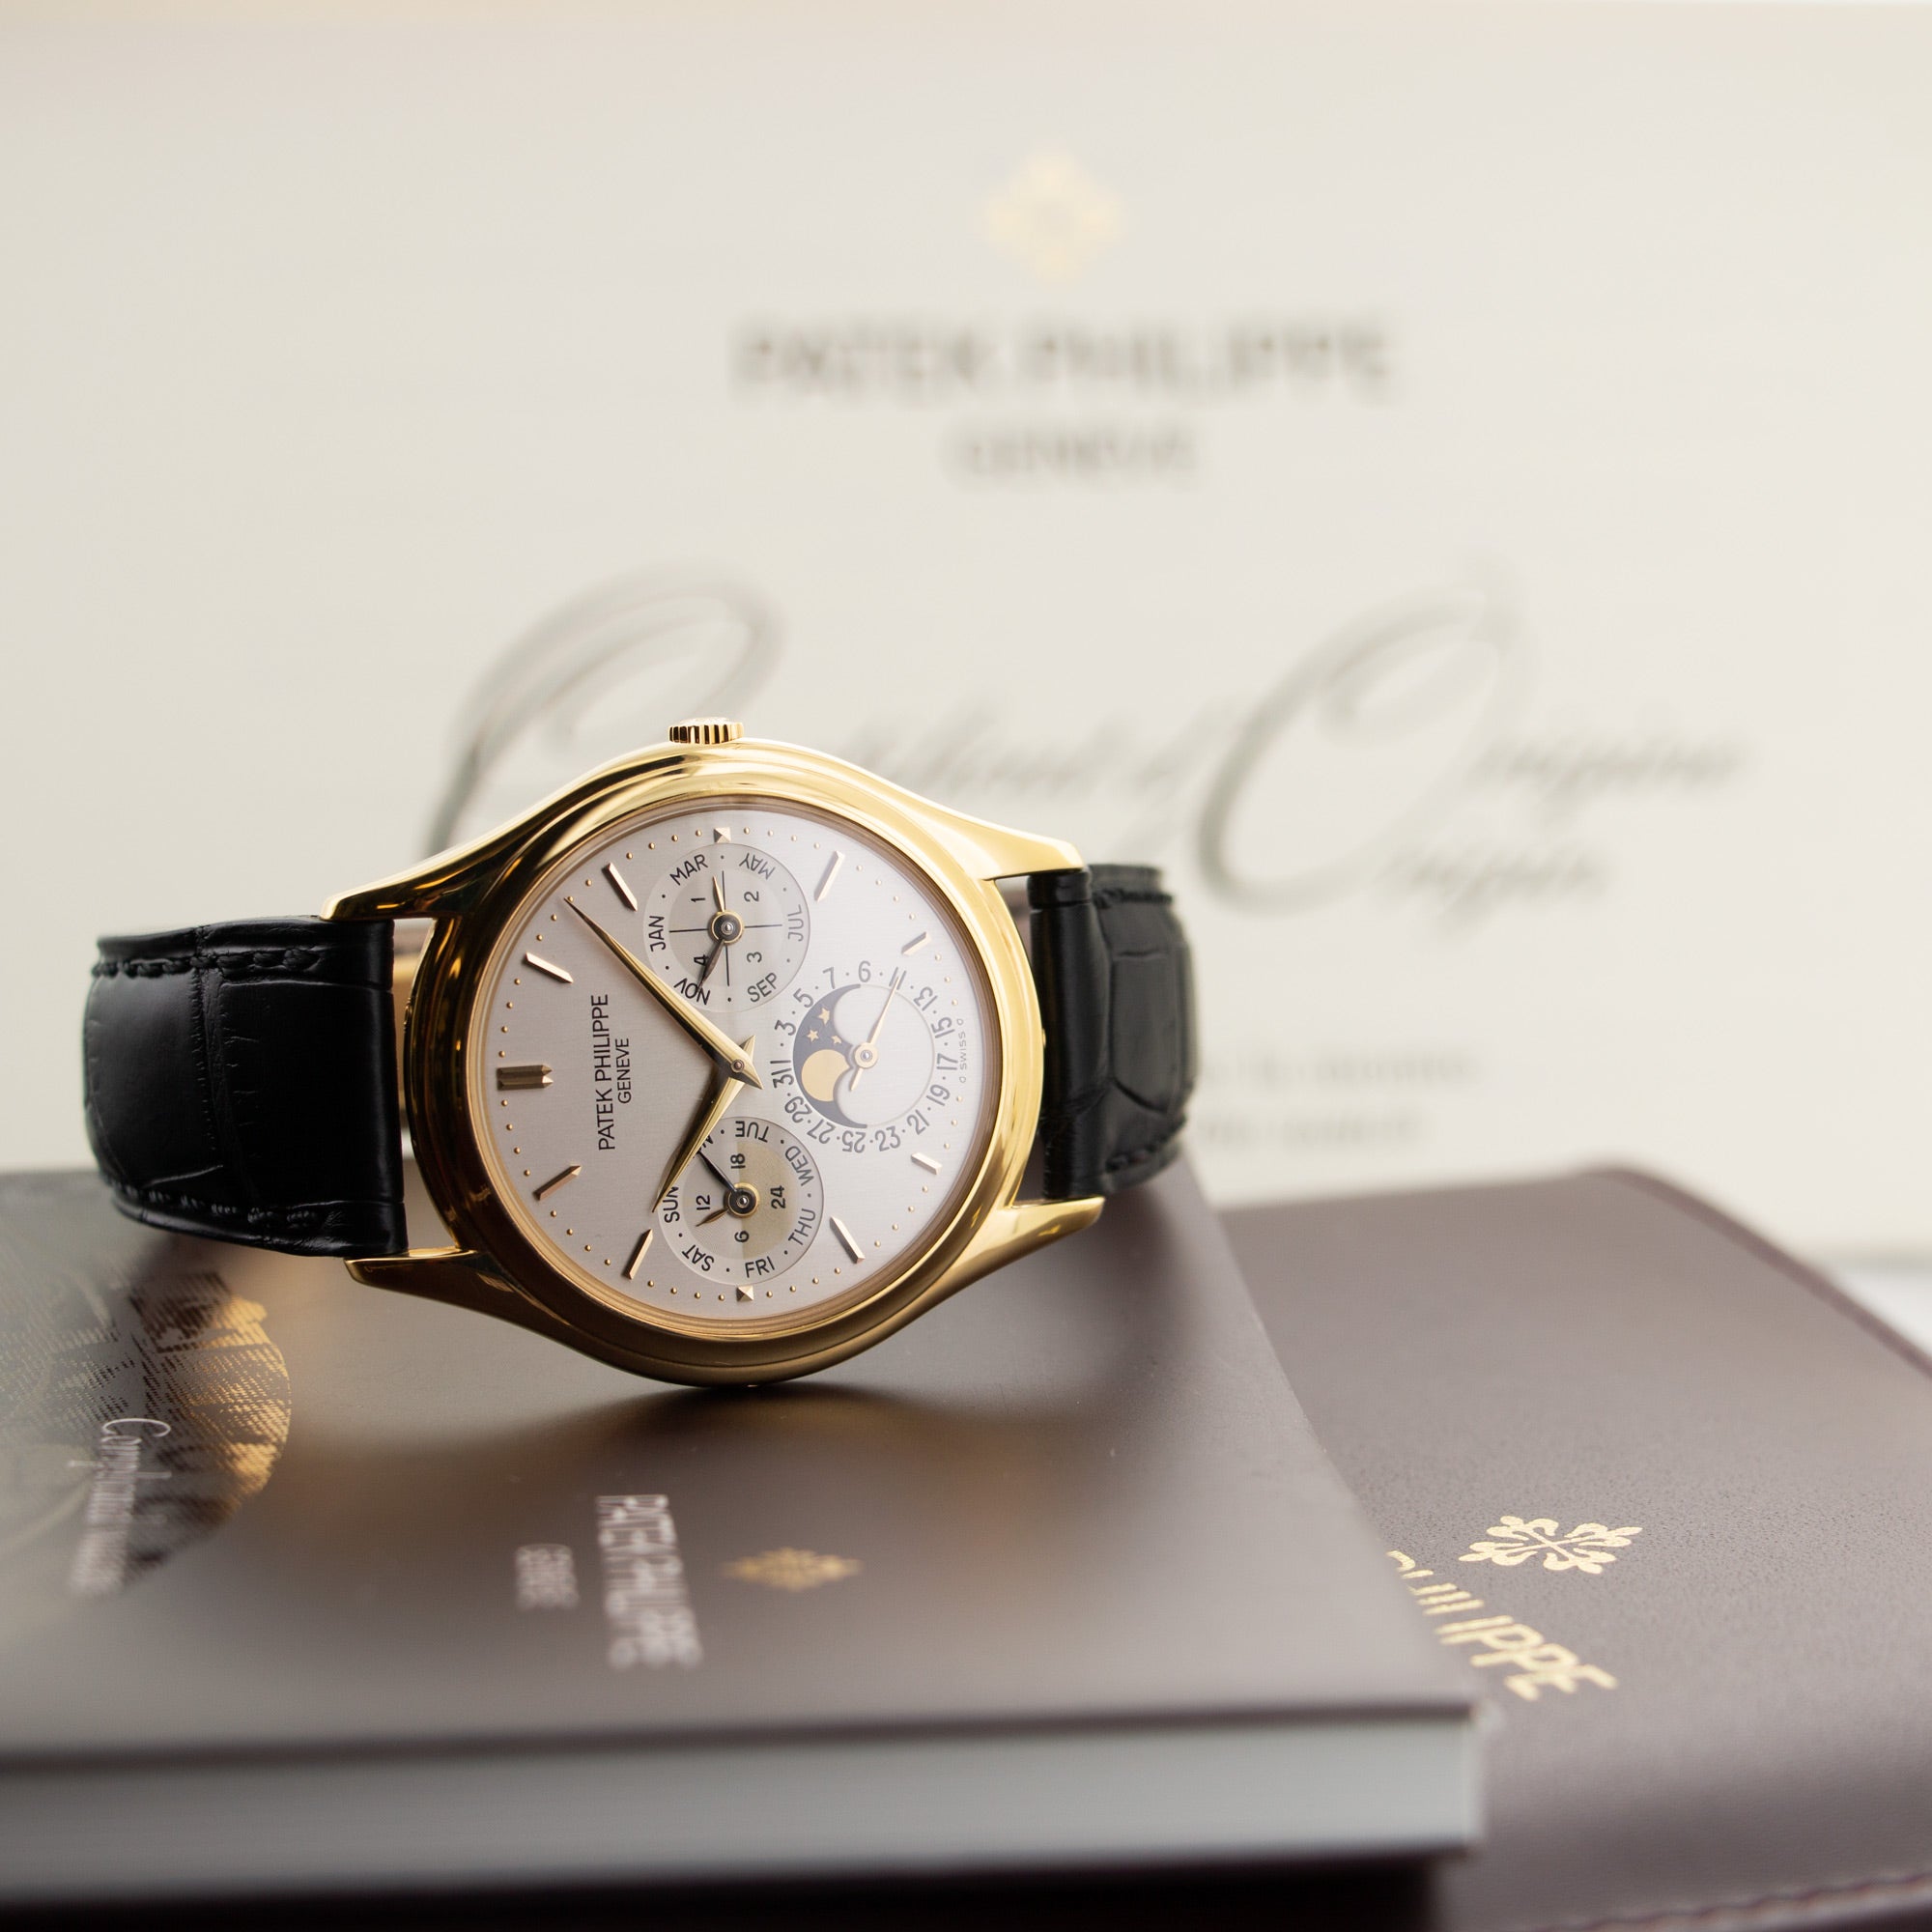 Patek Philippe - Patek Philippe Yellow Gold Perpetual Calendar Watch Ref. 3940 - The Keystone Watches